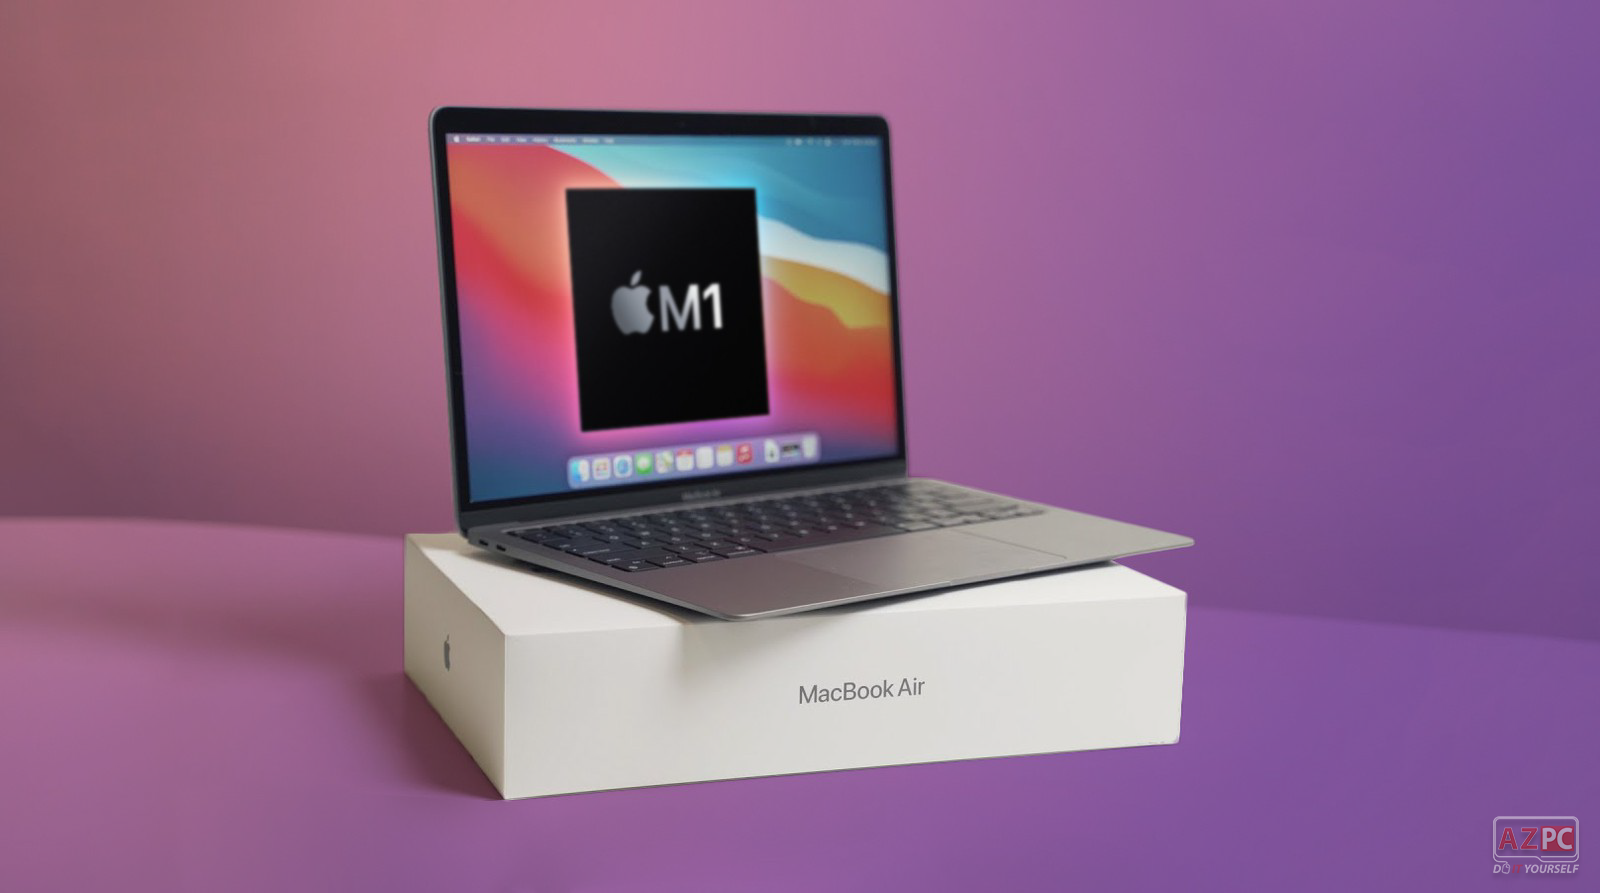 Apple Mac M1 